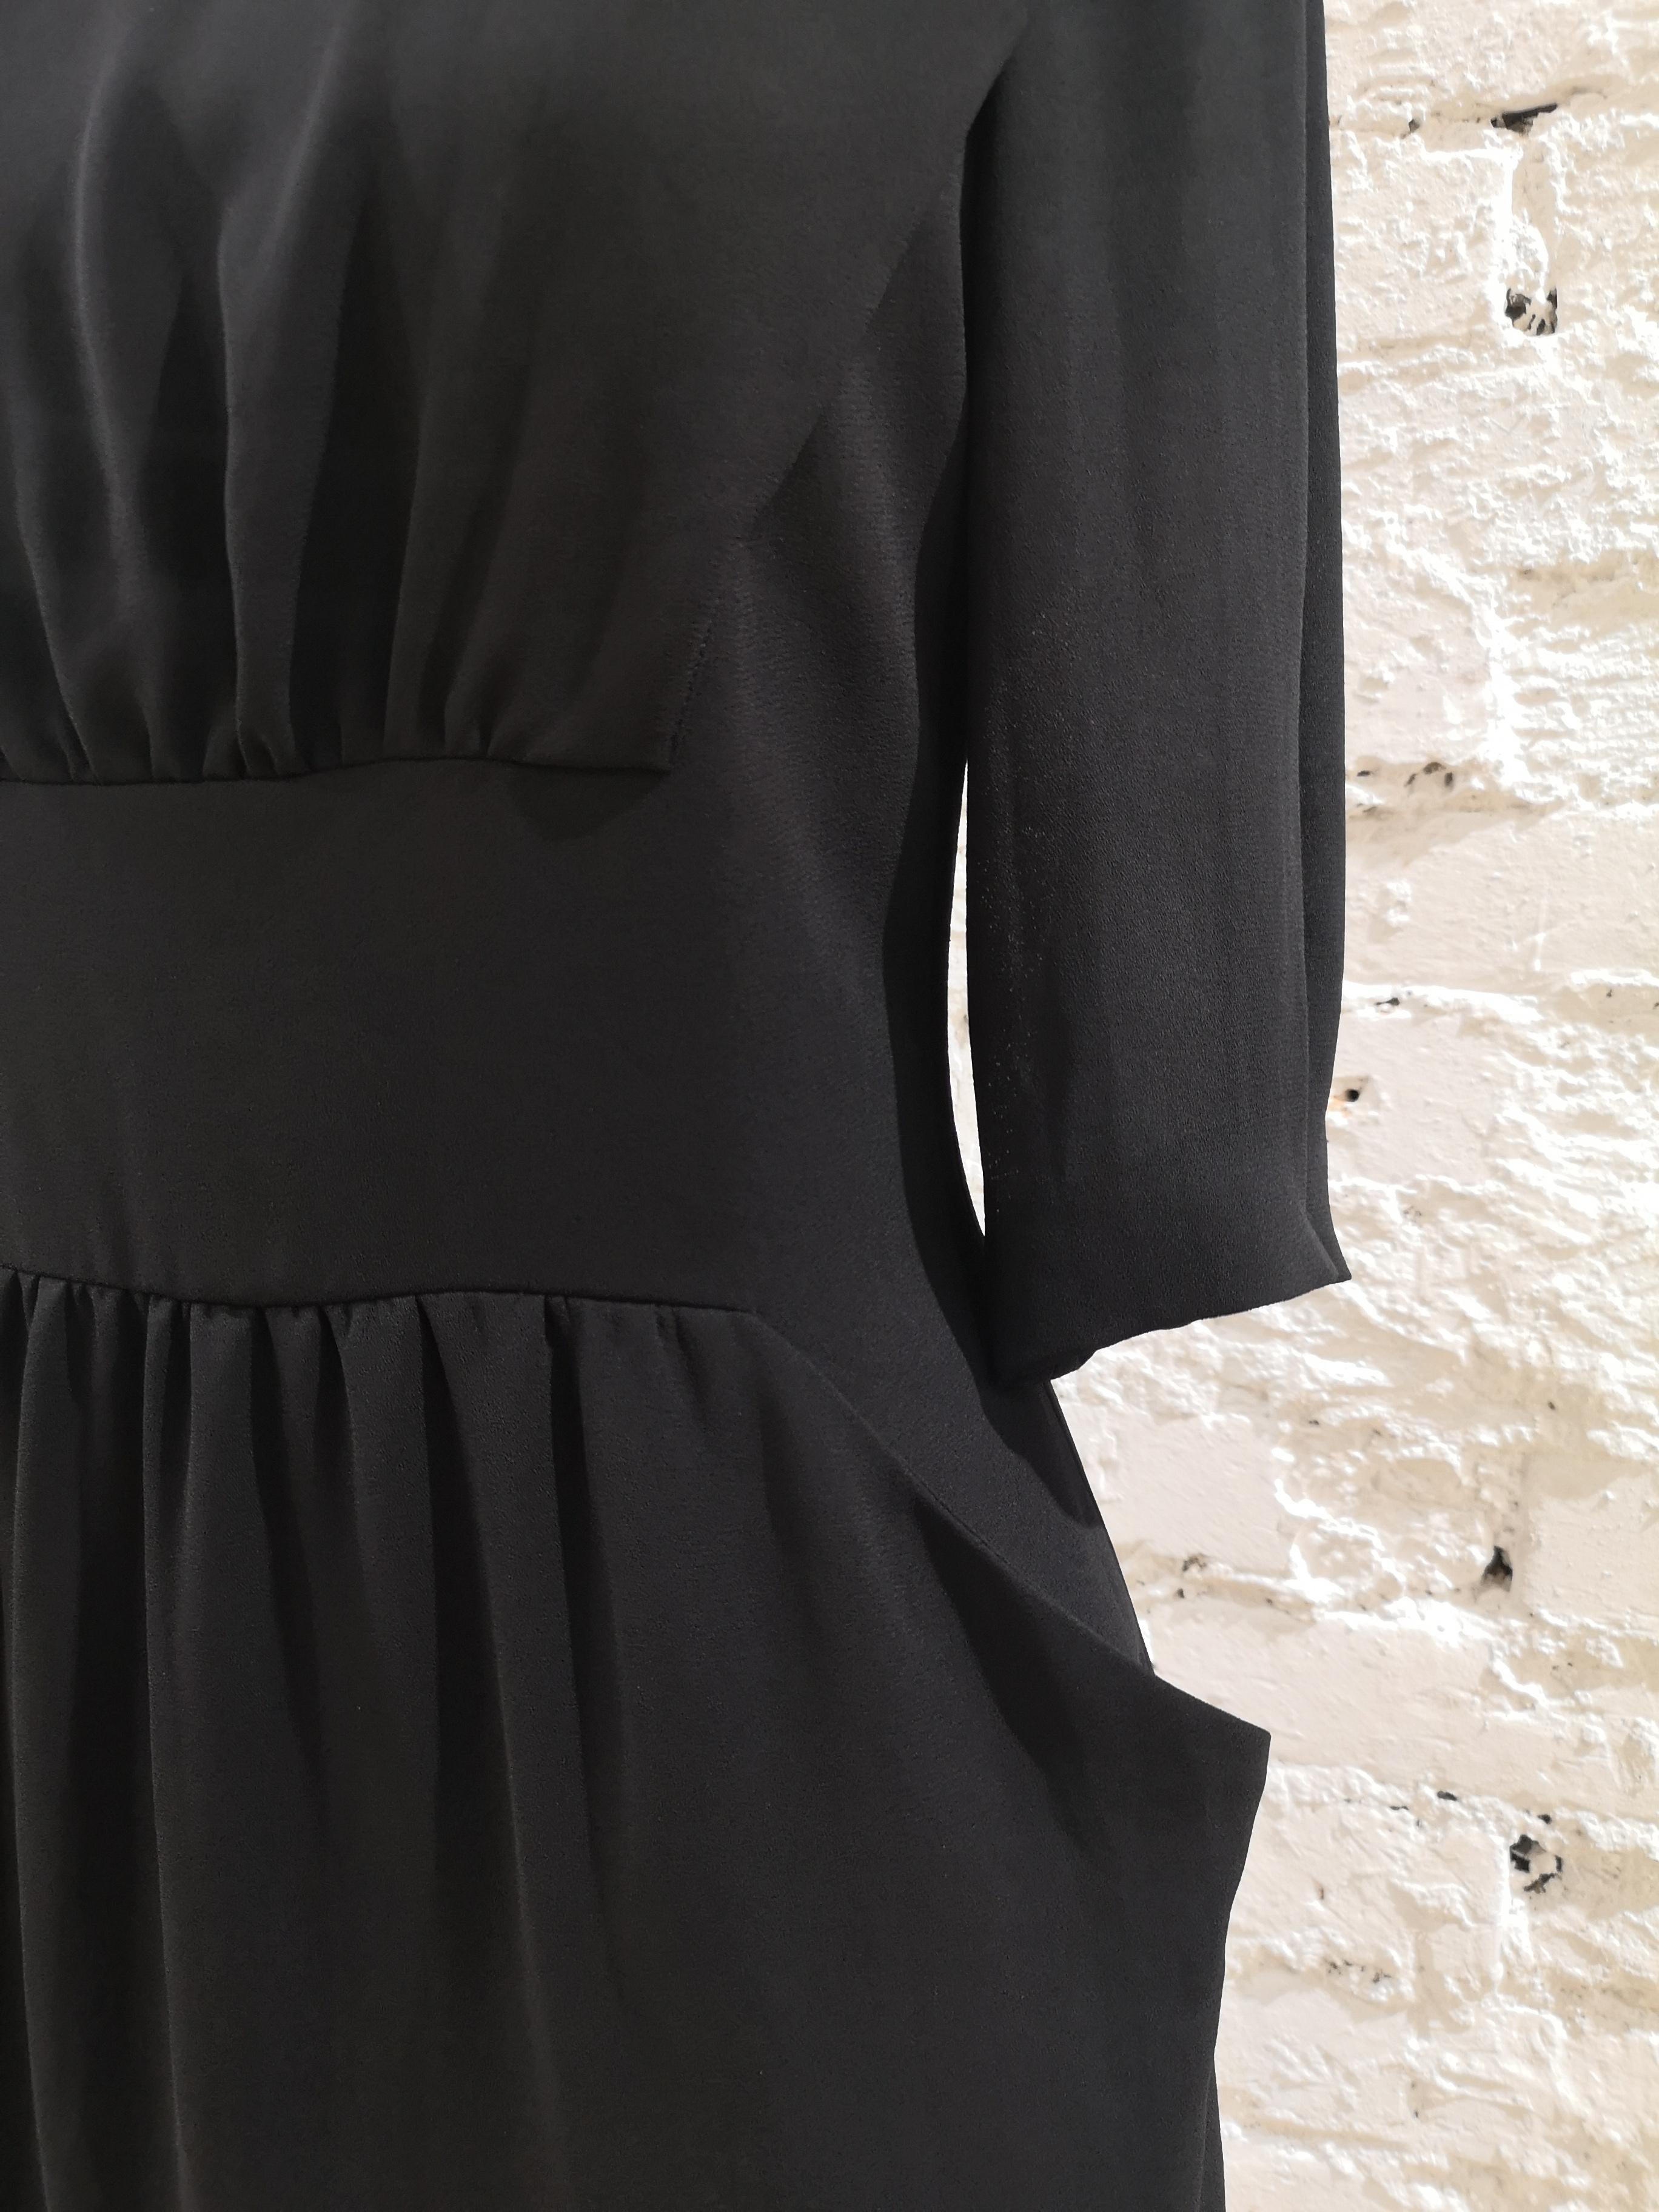 Black Prada black dress